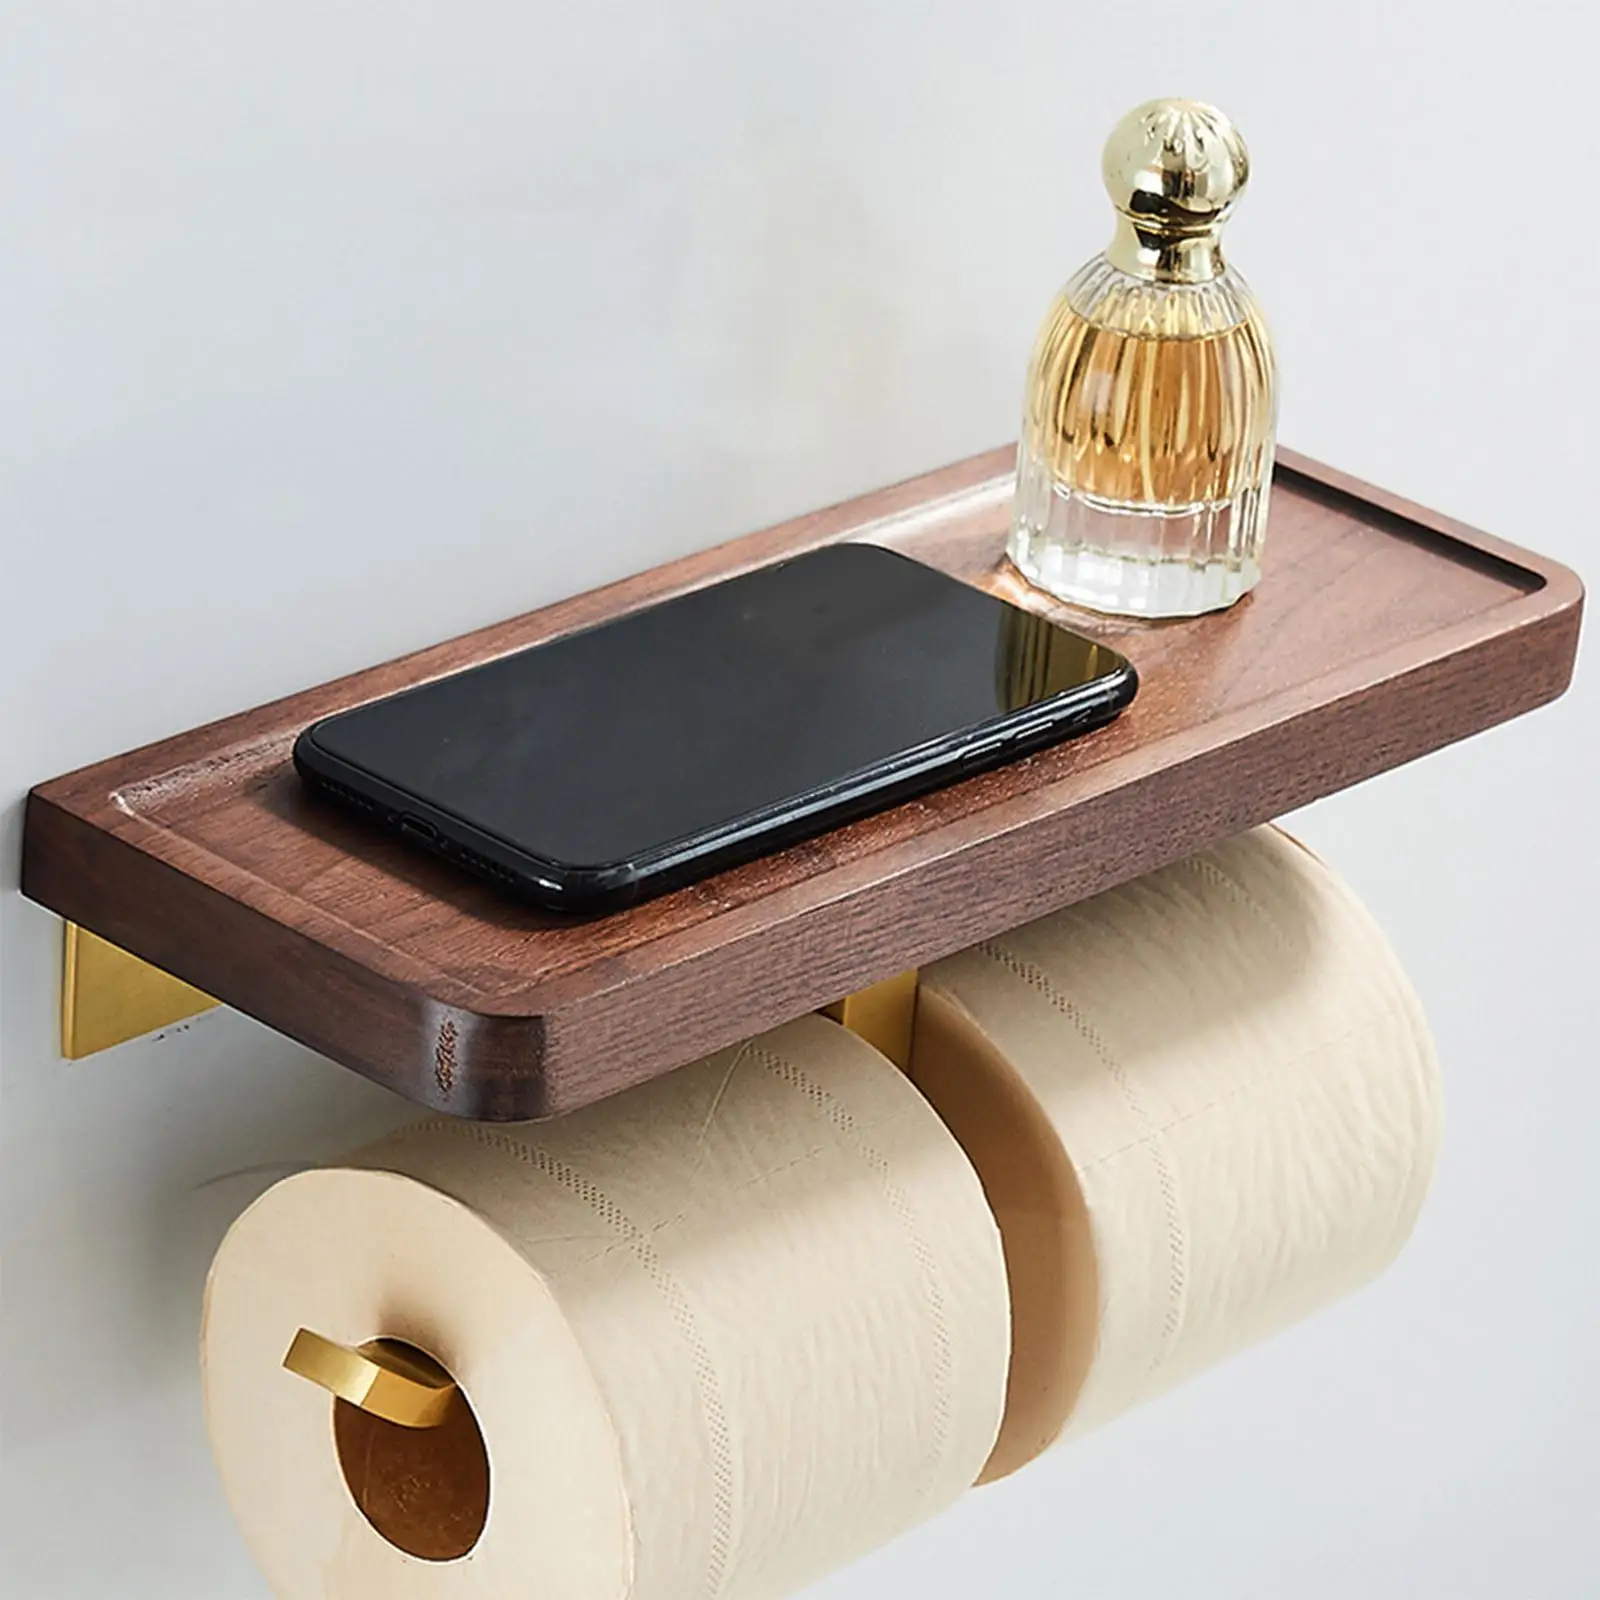 Walnut Wood Toilet Paper Holder with Shelf,Phone Holder,Stainless Steel Toilet Paper Roll Holder